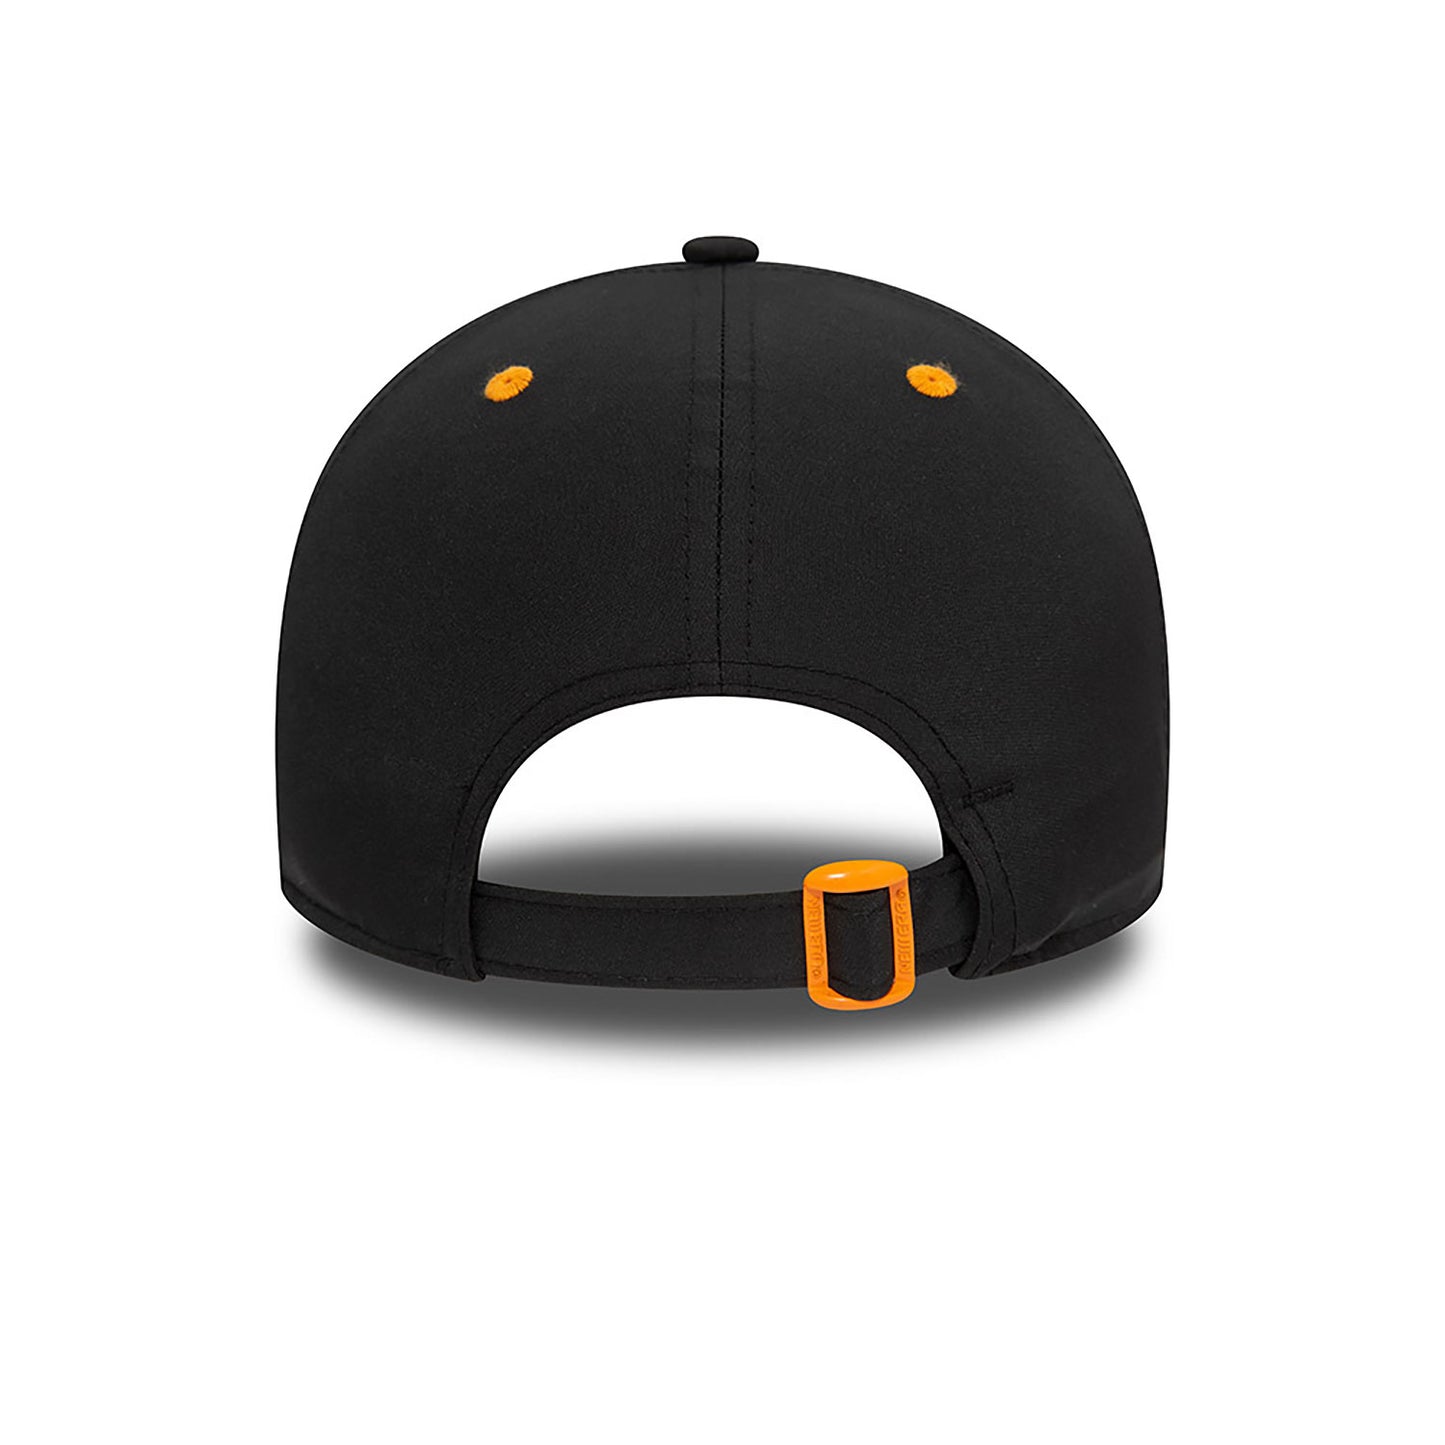 New Era Şapka - McLaren Automotive Kontrast Siyah 9FORTY Ayarlanabilir Şapka